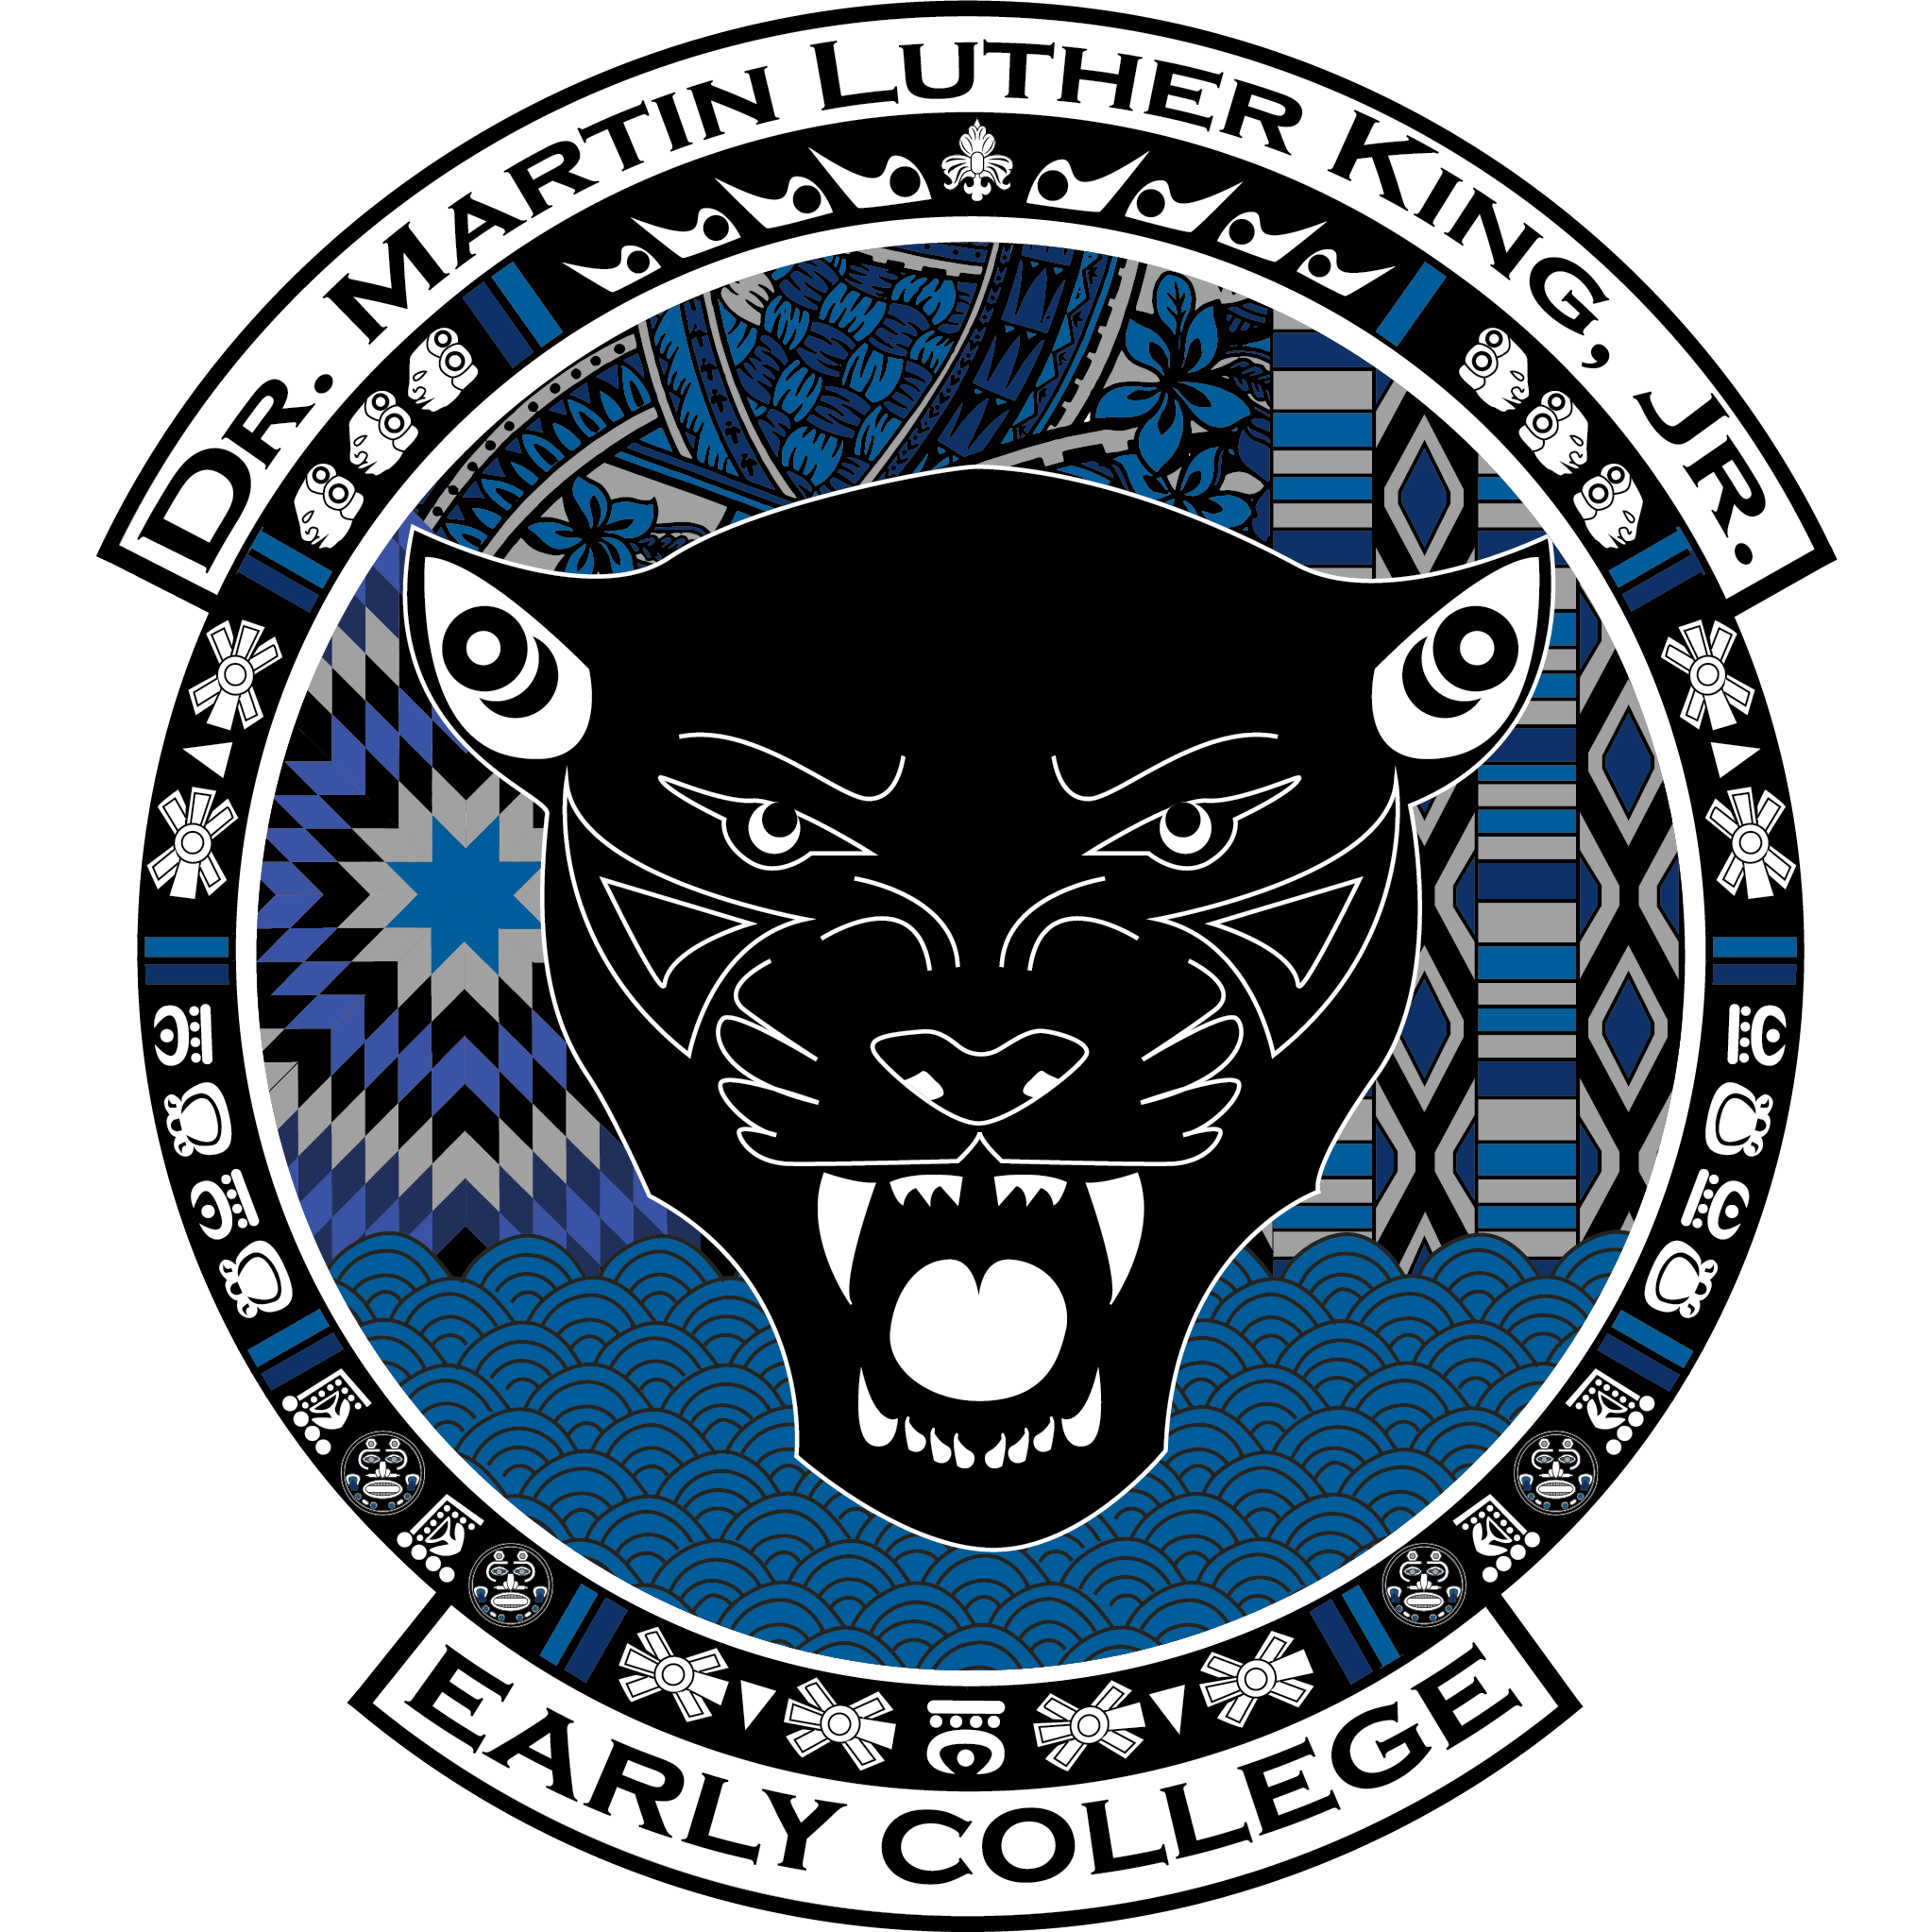 Dr. Martin Luther King, Jr. Panthers logo